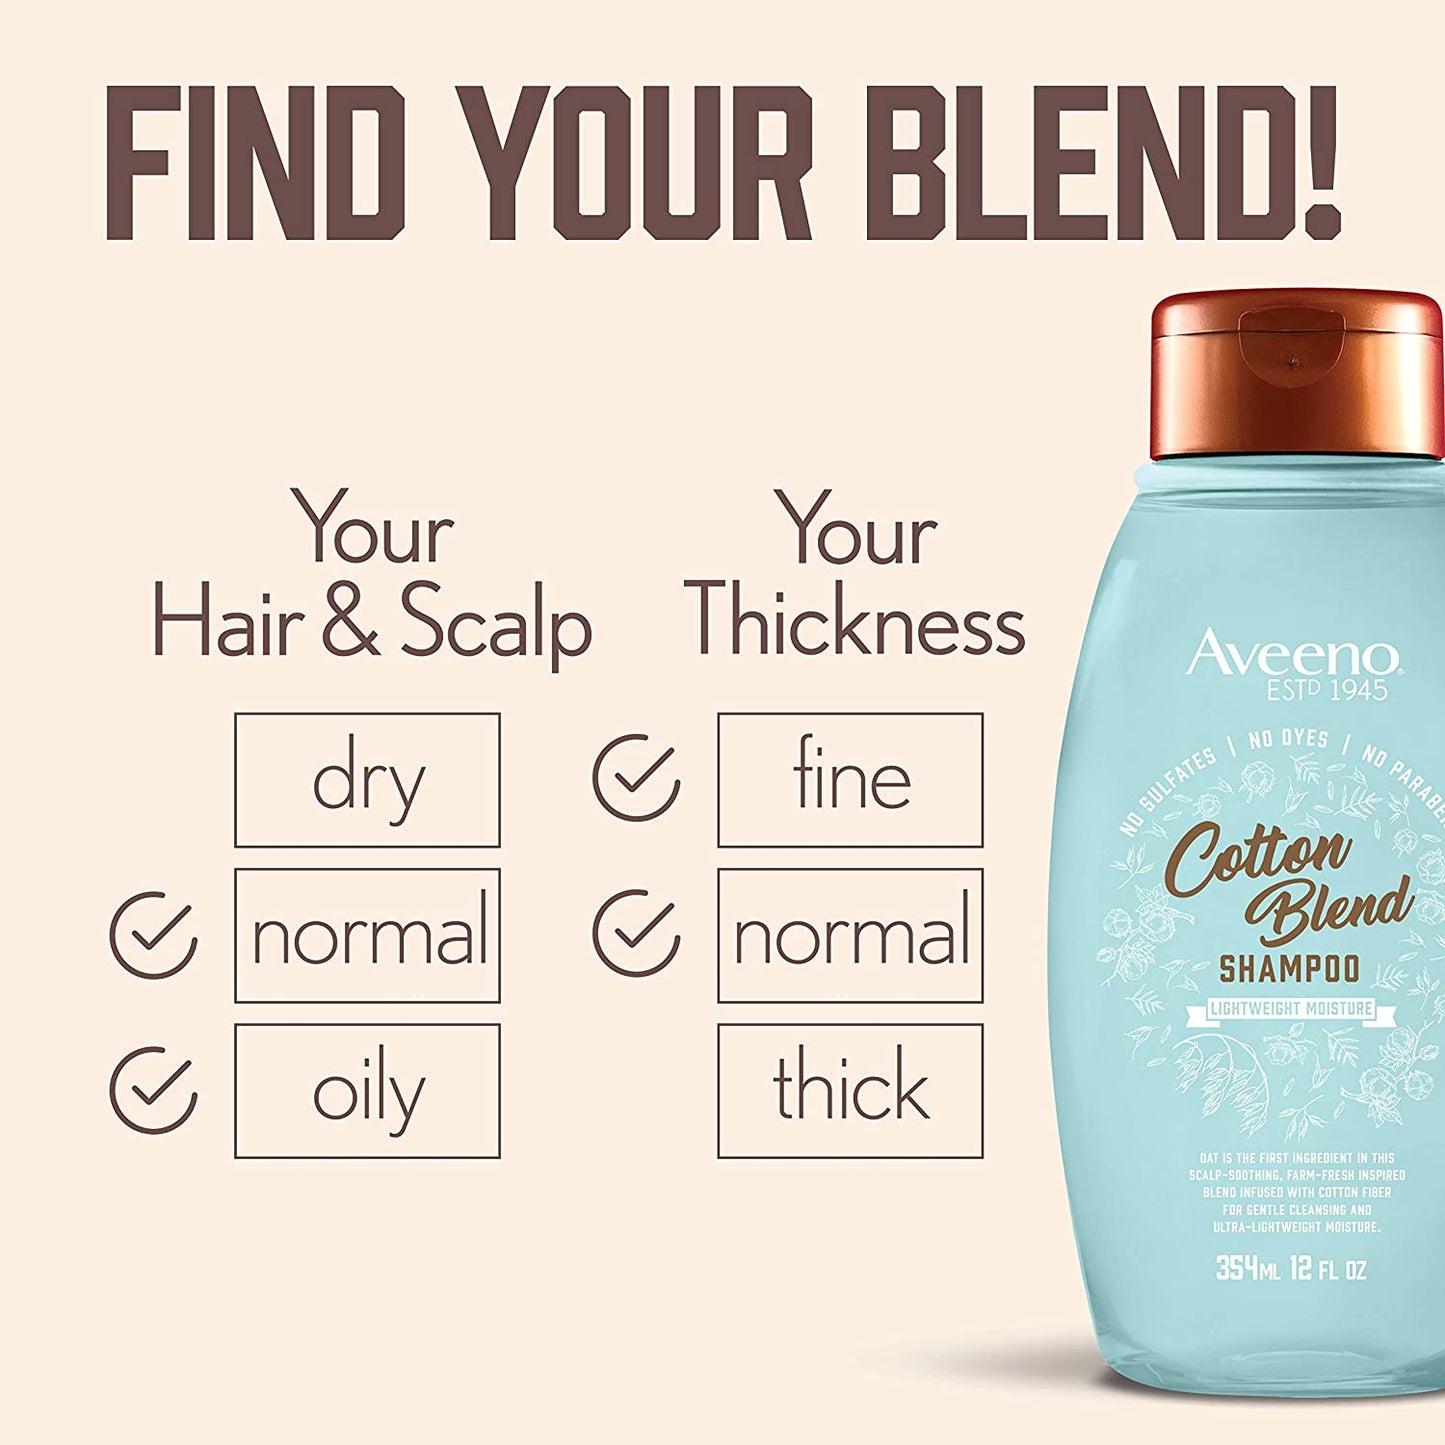 Aveeno Cotton Blend Sulfate-Free Shampoo Lightweight Moisture, 12 fl.oz / 354ml